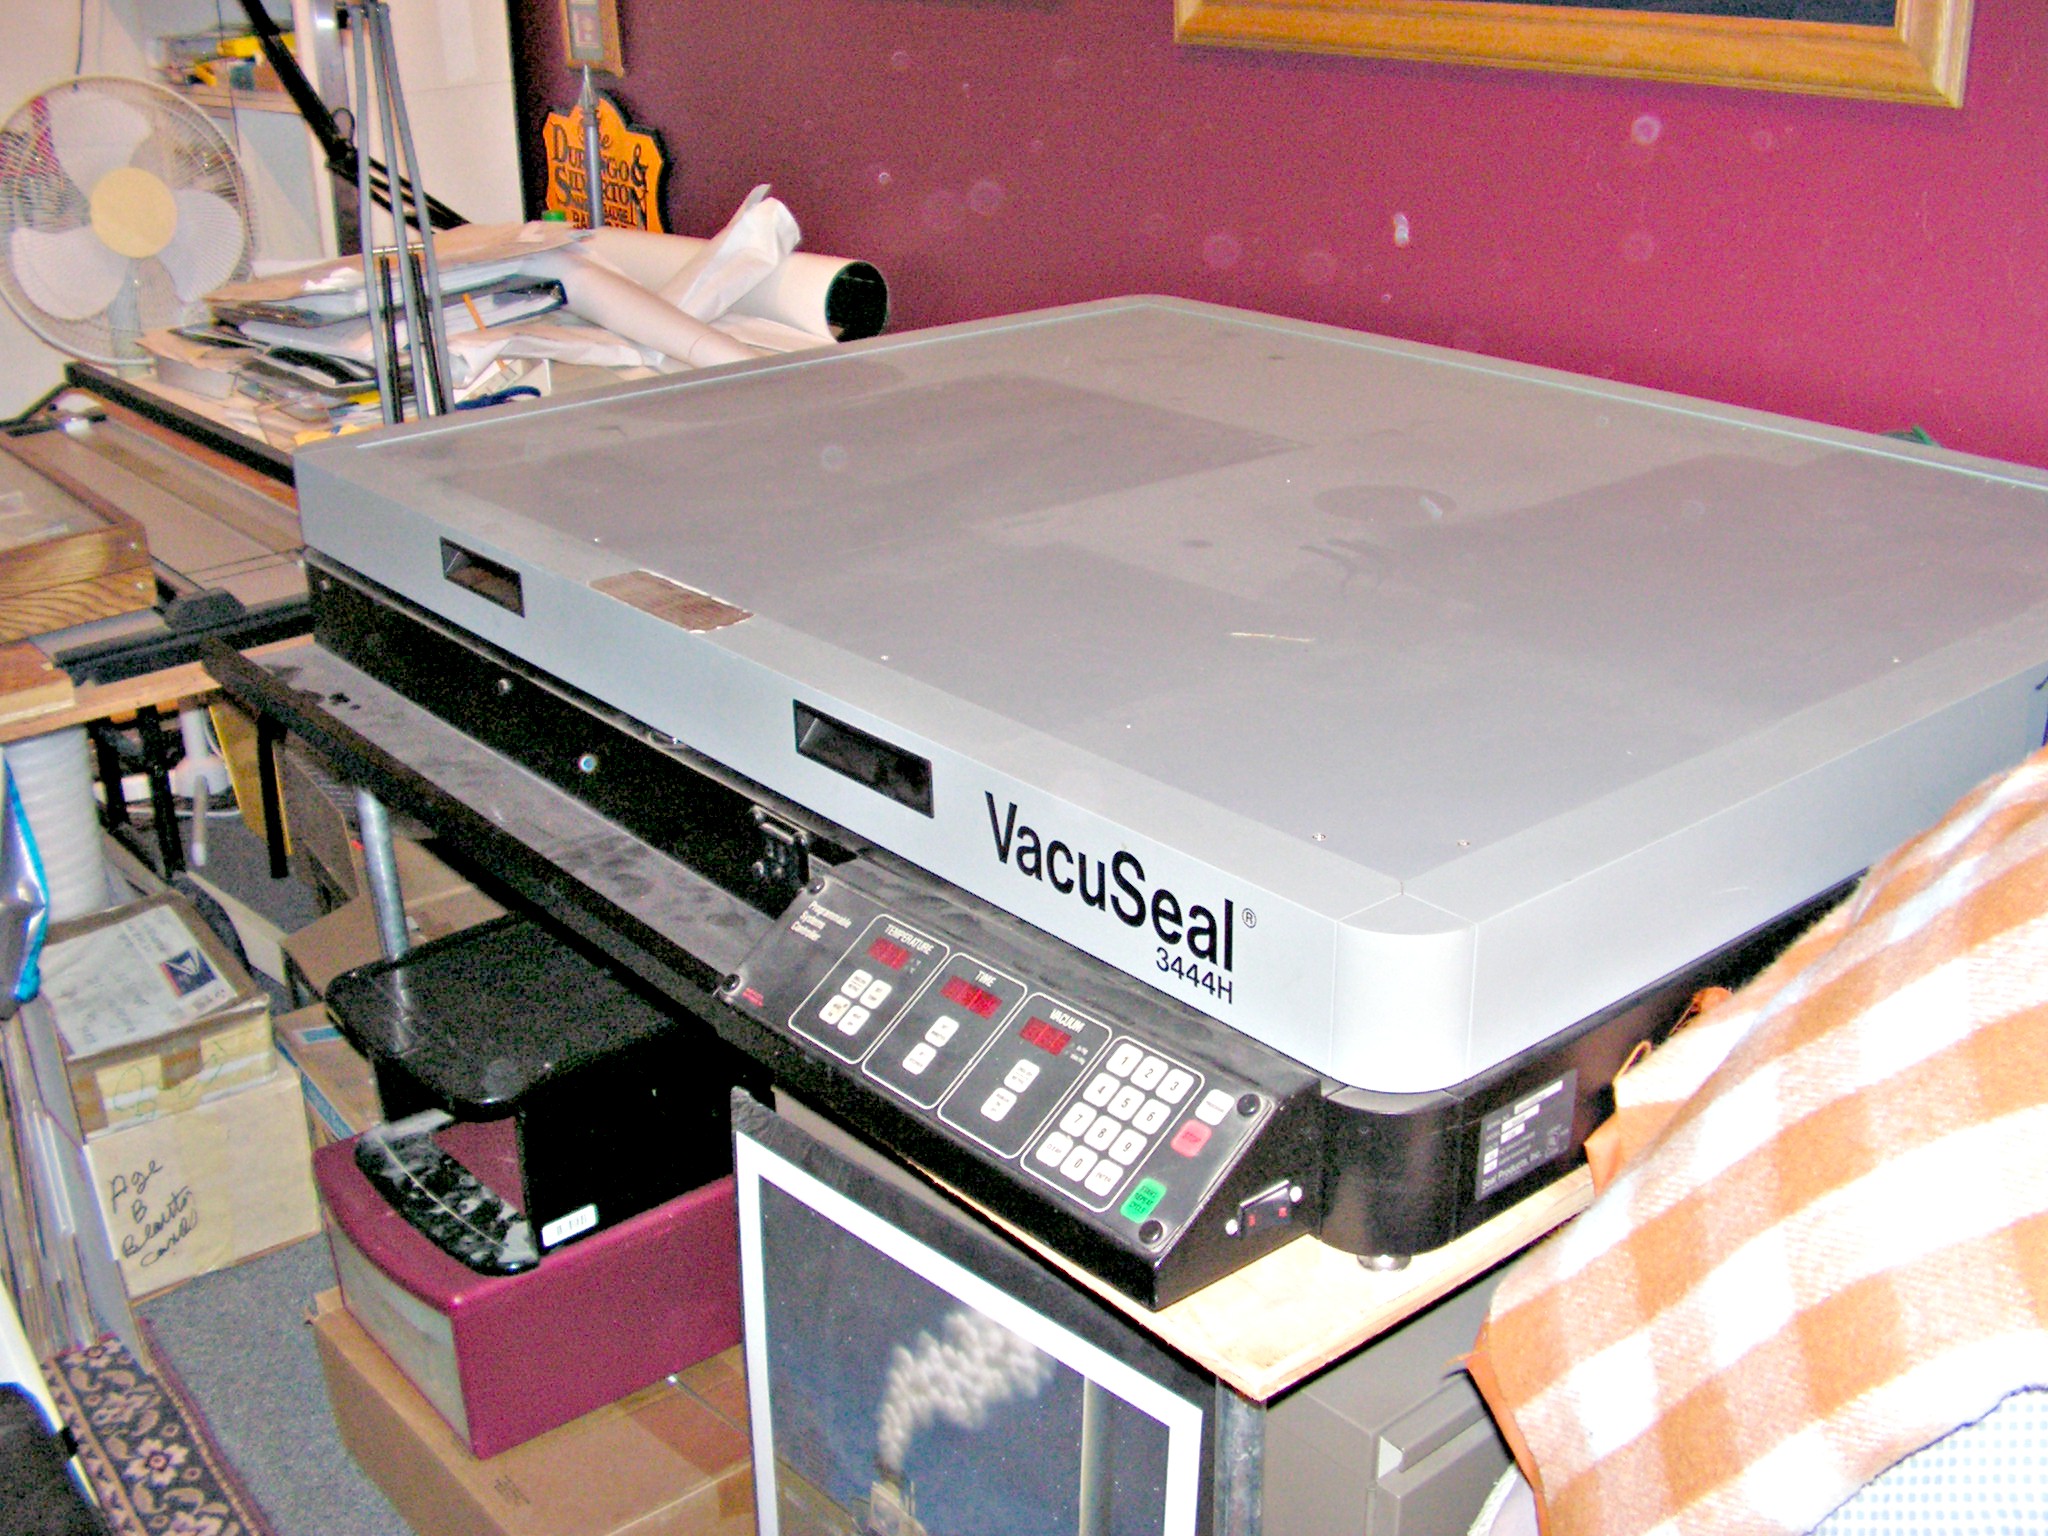 VacuSeal 3444H Vacuum Dry Mount Press (Used) Item # UFE-M1771)